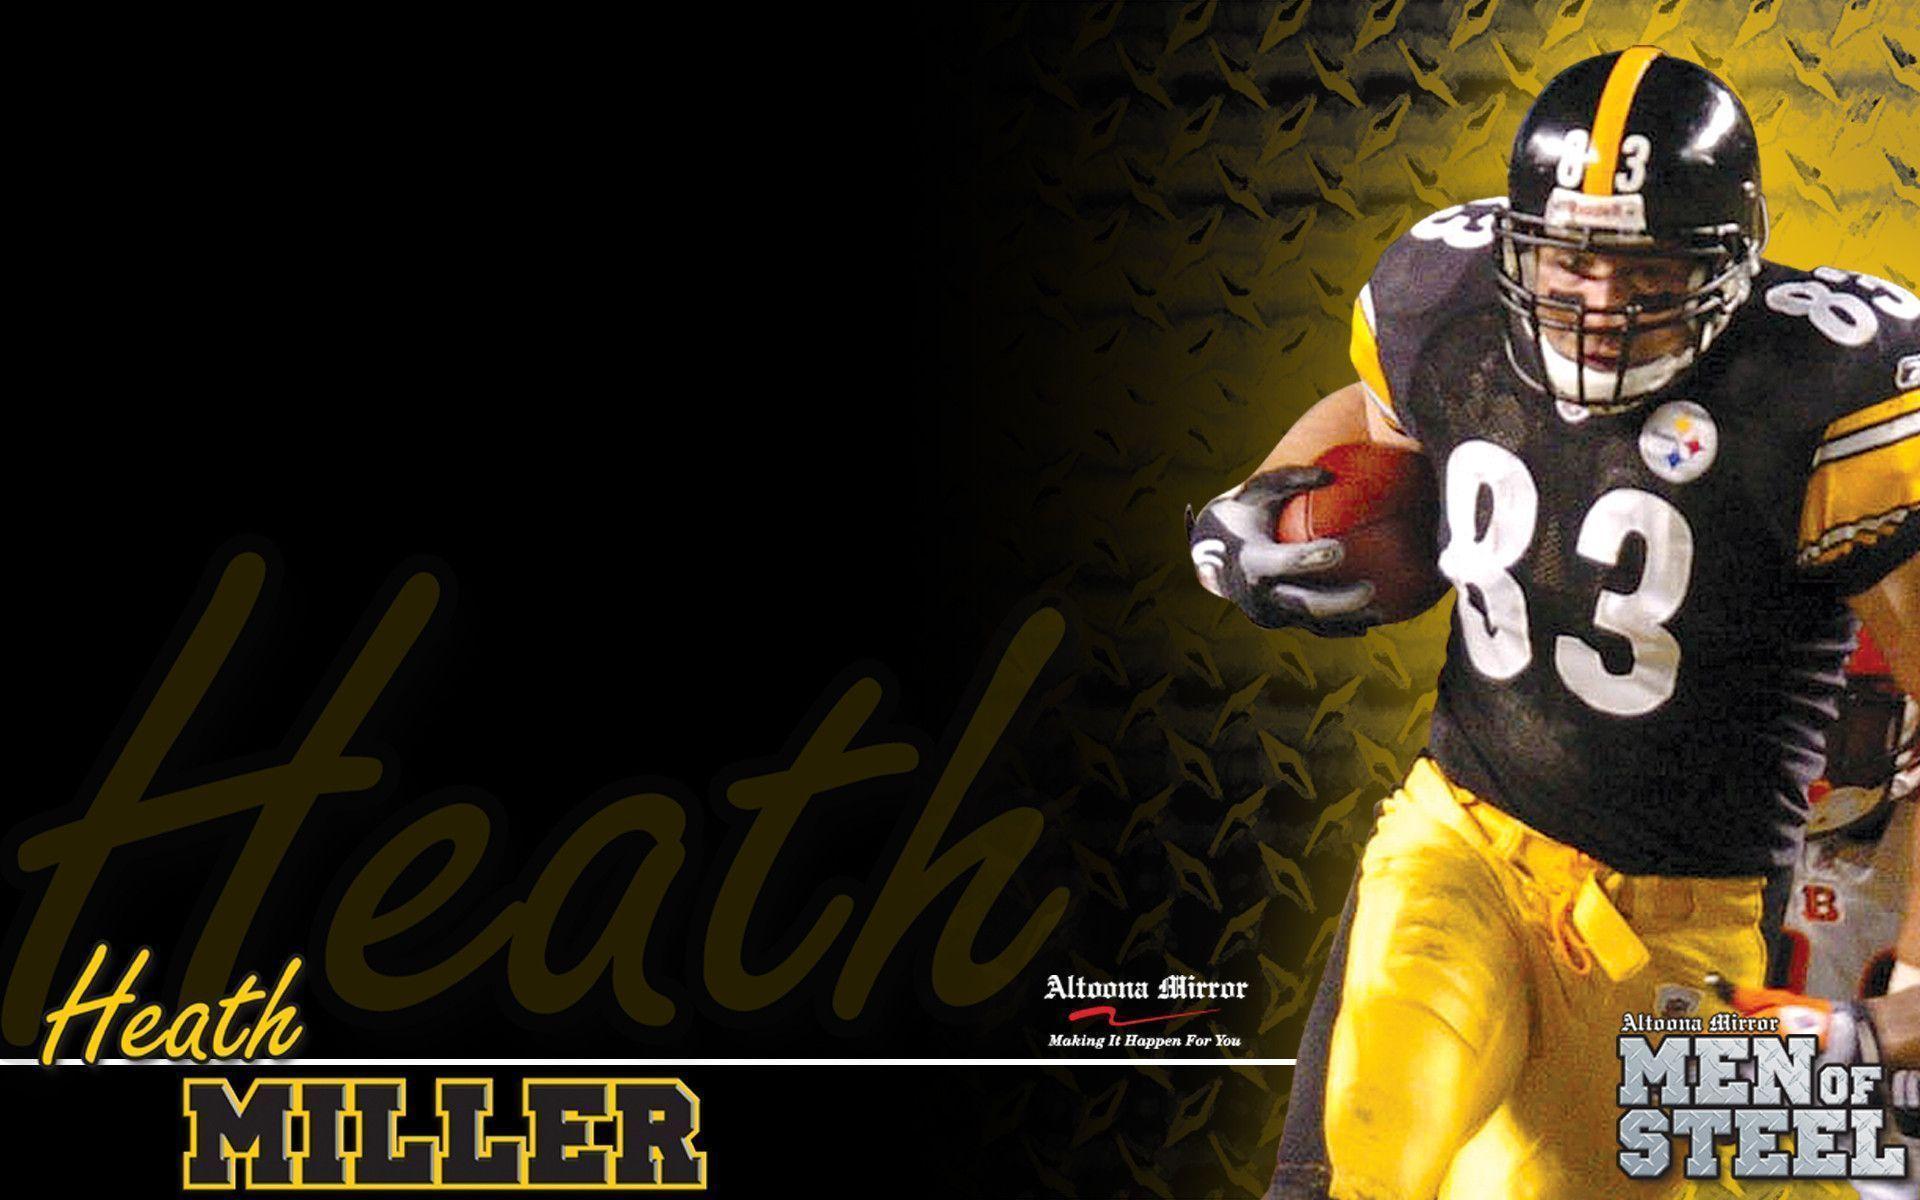 Steelers Background 2577 Wallpaper: 1024x768